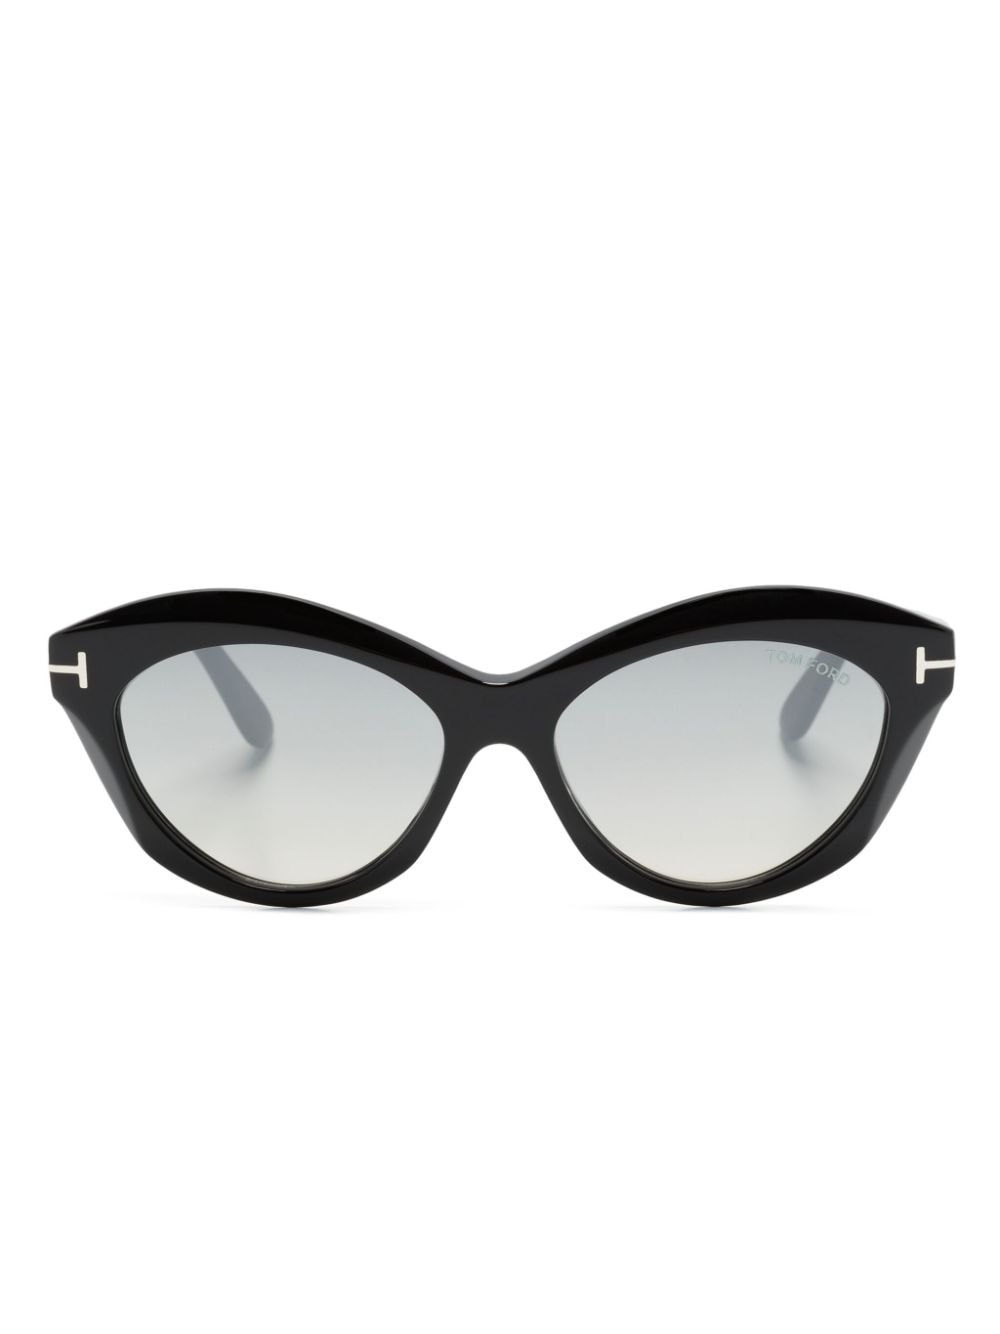 TOM FORD Eyewear Toni cat-eye sunglasses - Black von TOM FORD Eyewear